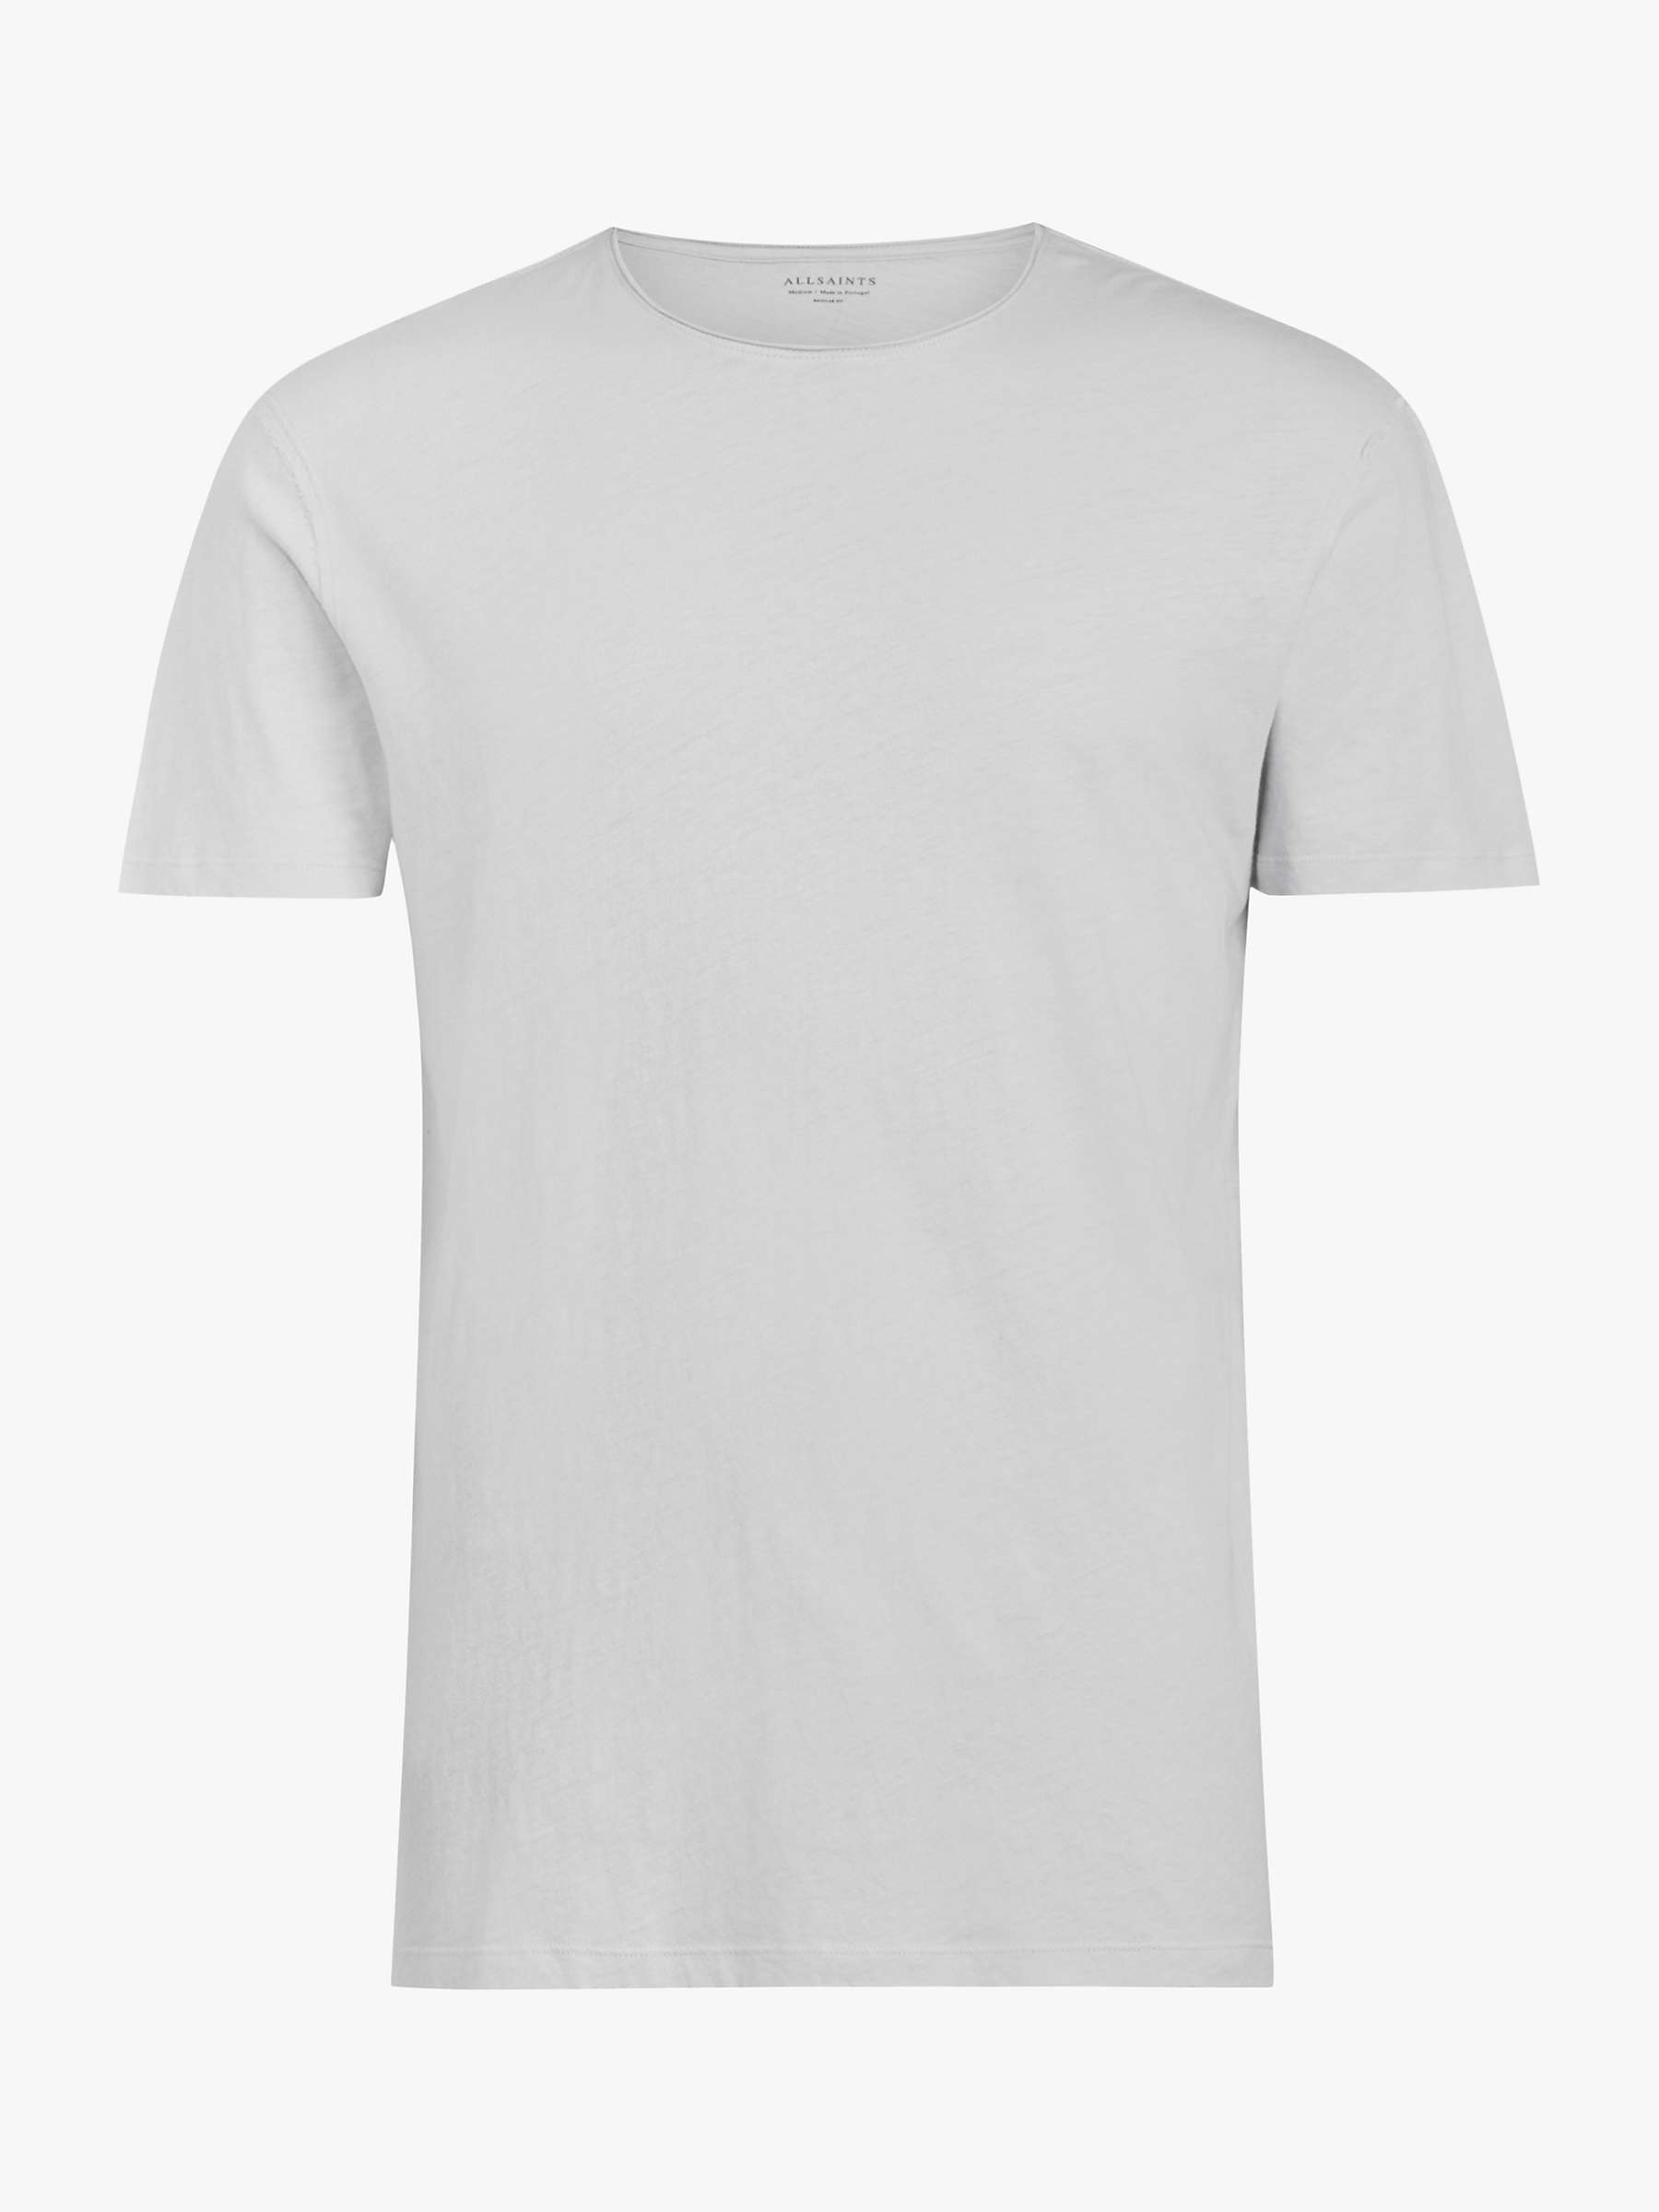 AllSaints Figure Crew T-Shirt, Lithium Grey at John Lewis & Partners